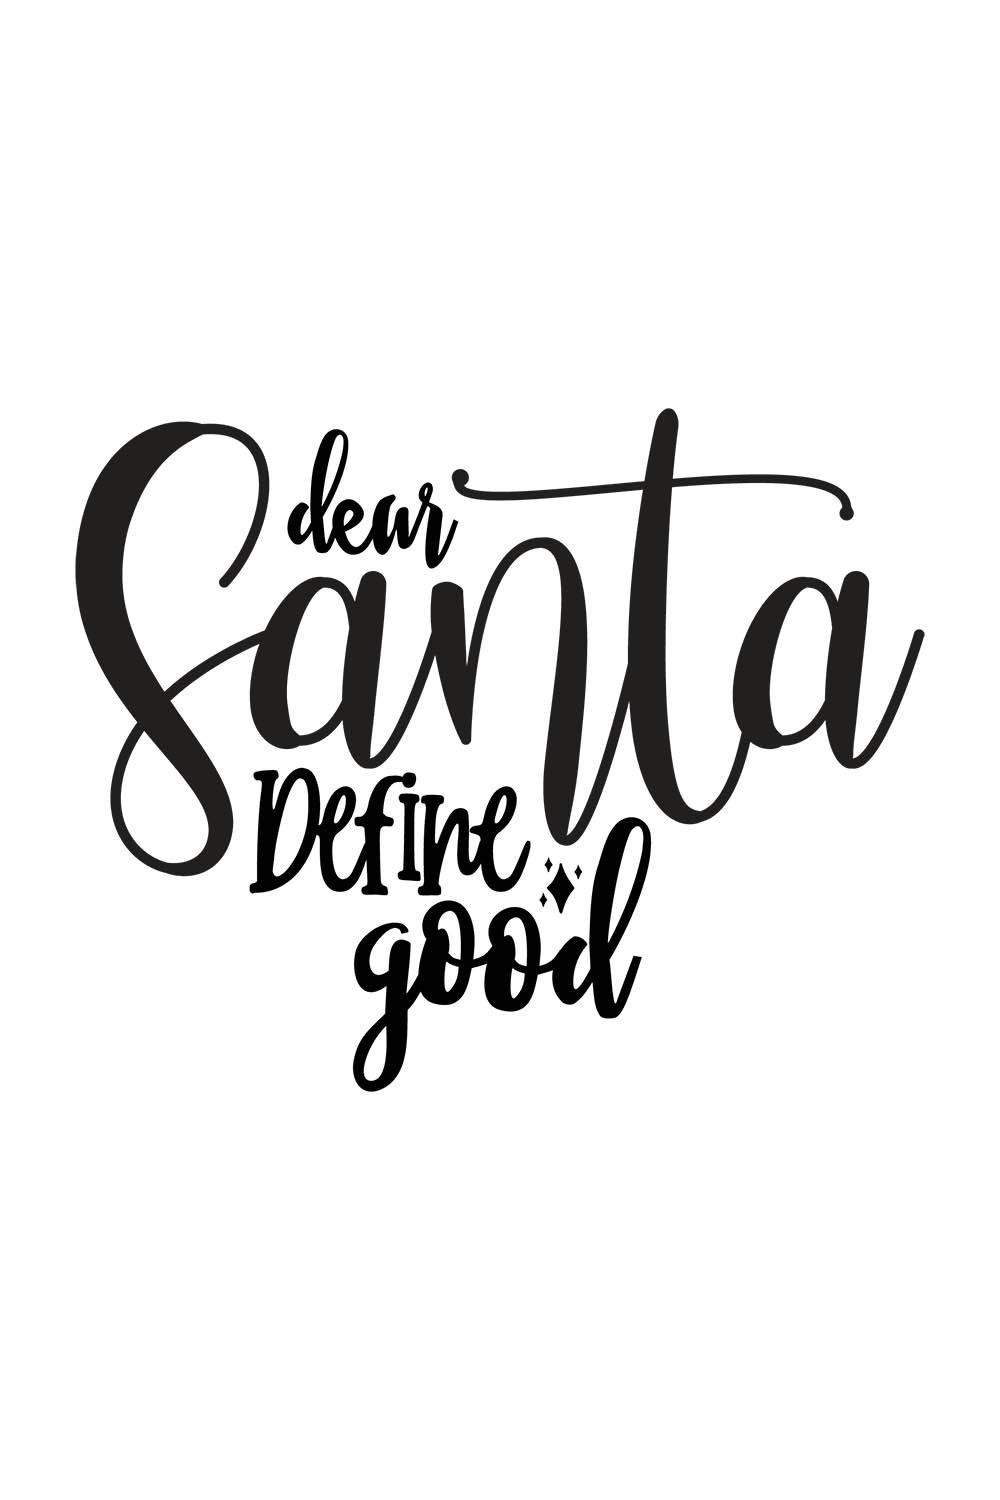 Image with irresistible black lettering for prints Dear Santa Define Good.